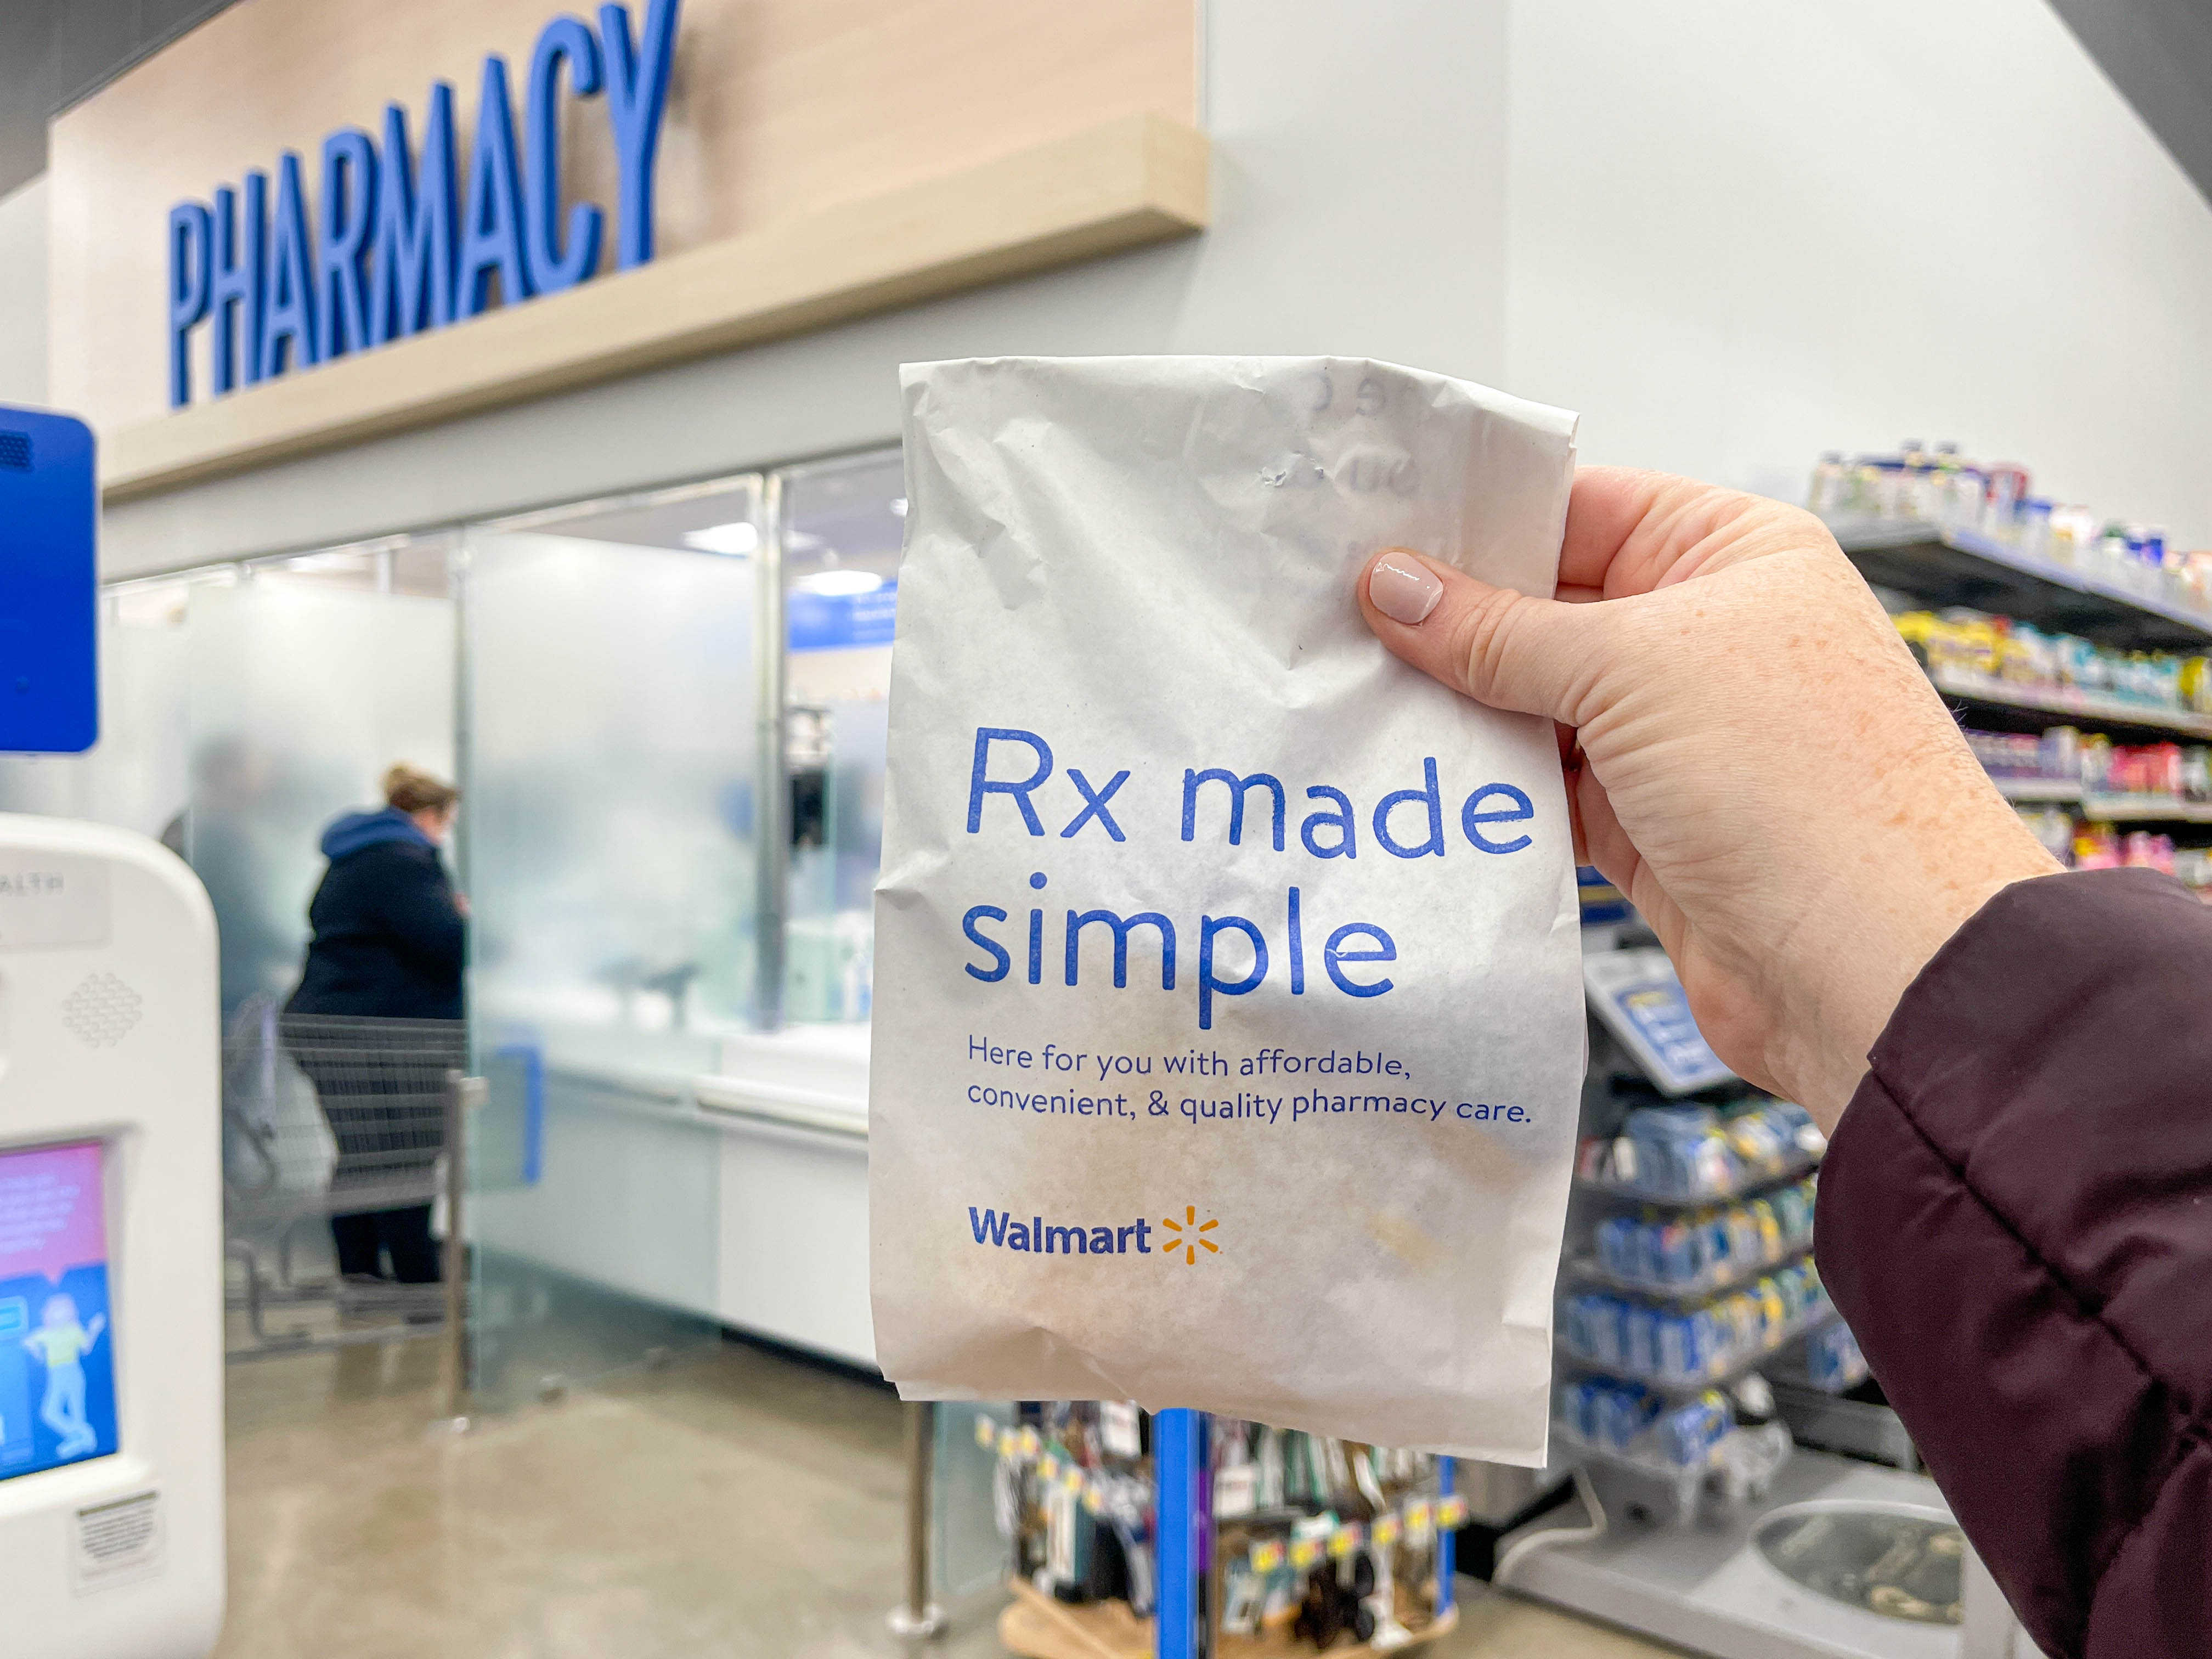 ShopRite Pharmacy  Prescription Refills, Vaccines, and More